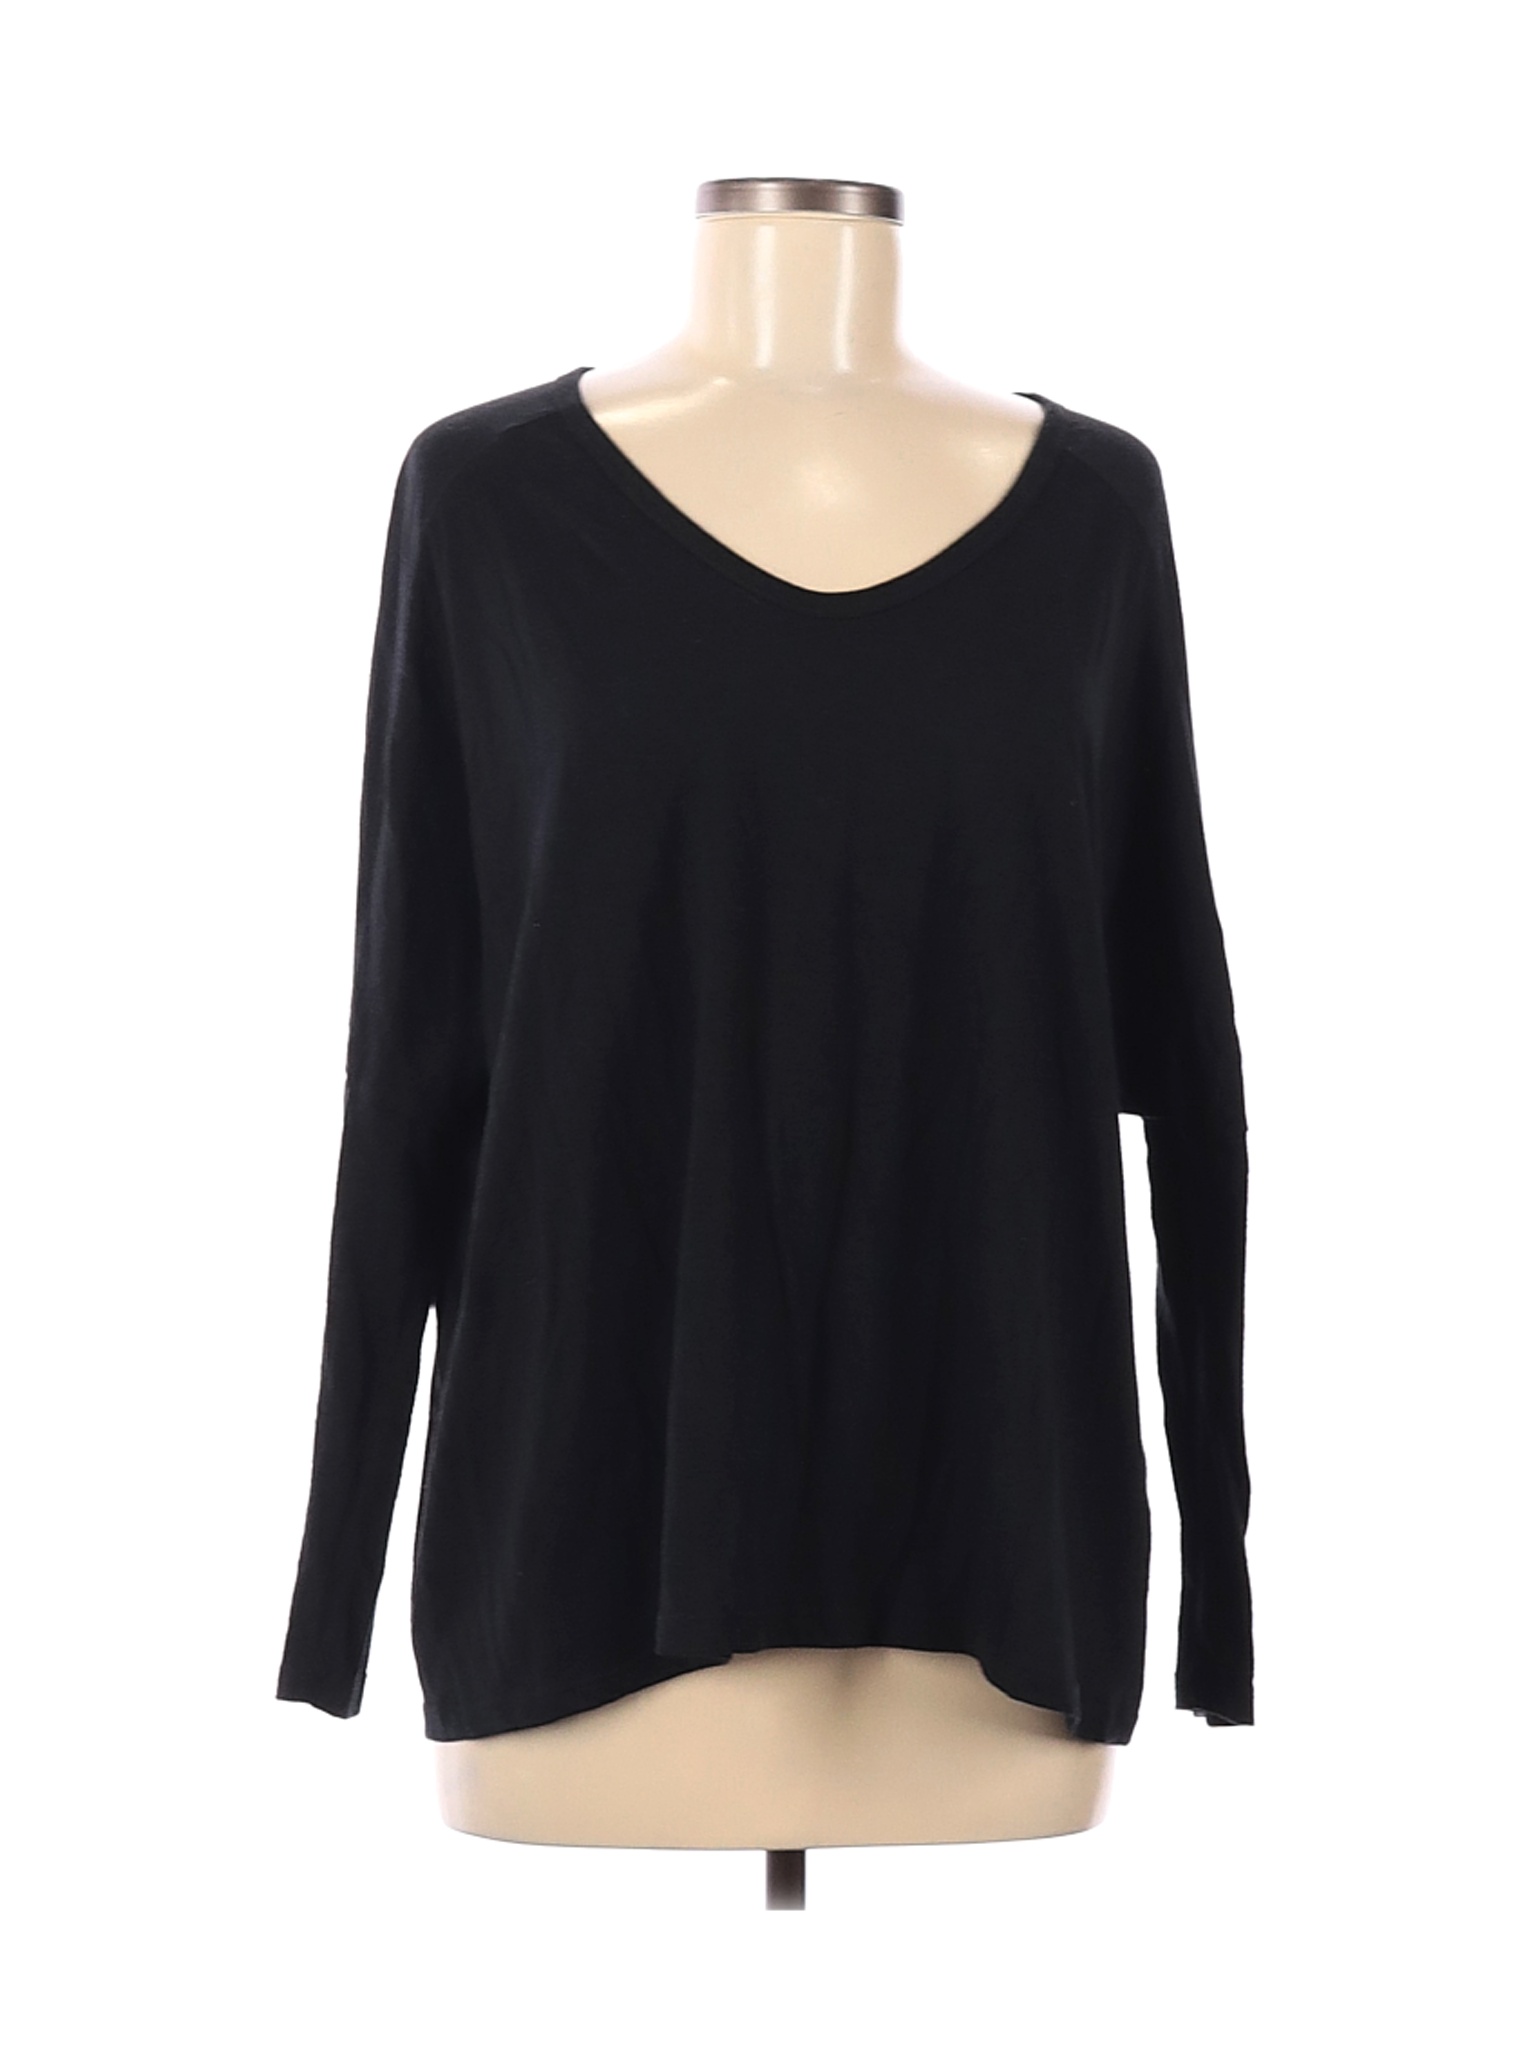 Cotton On Women Black Long Sleeve T-Shirt M | eBay